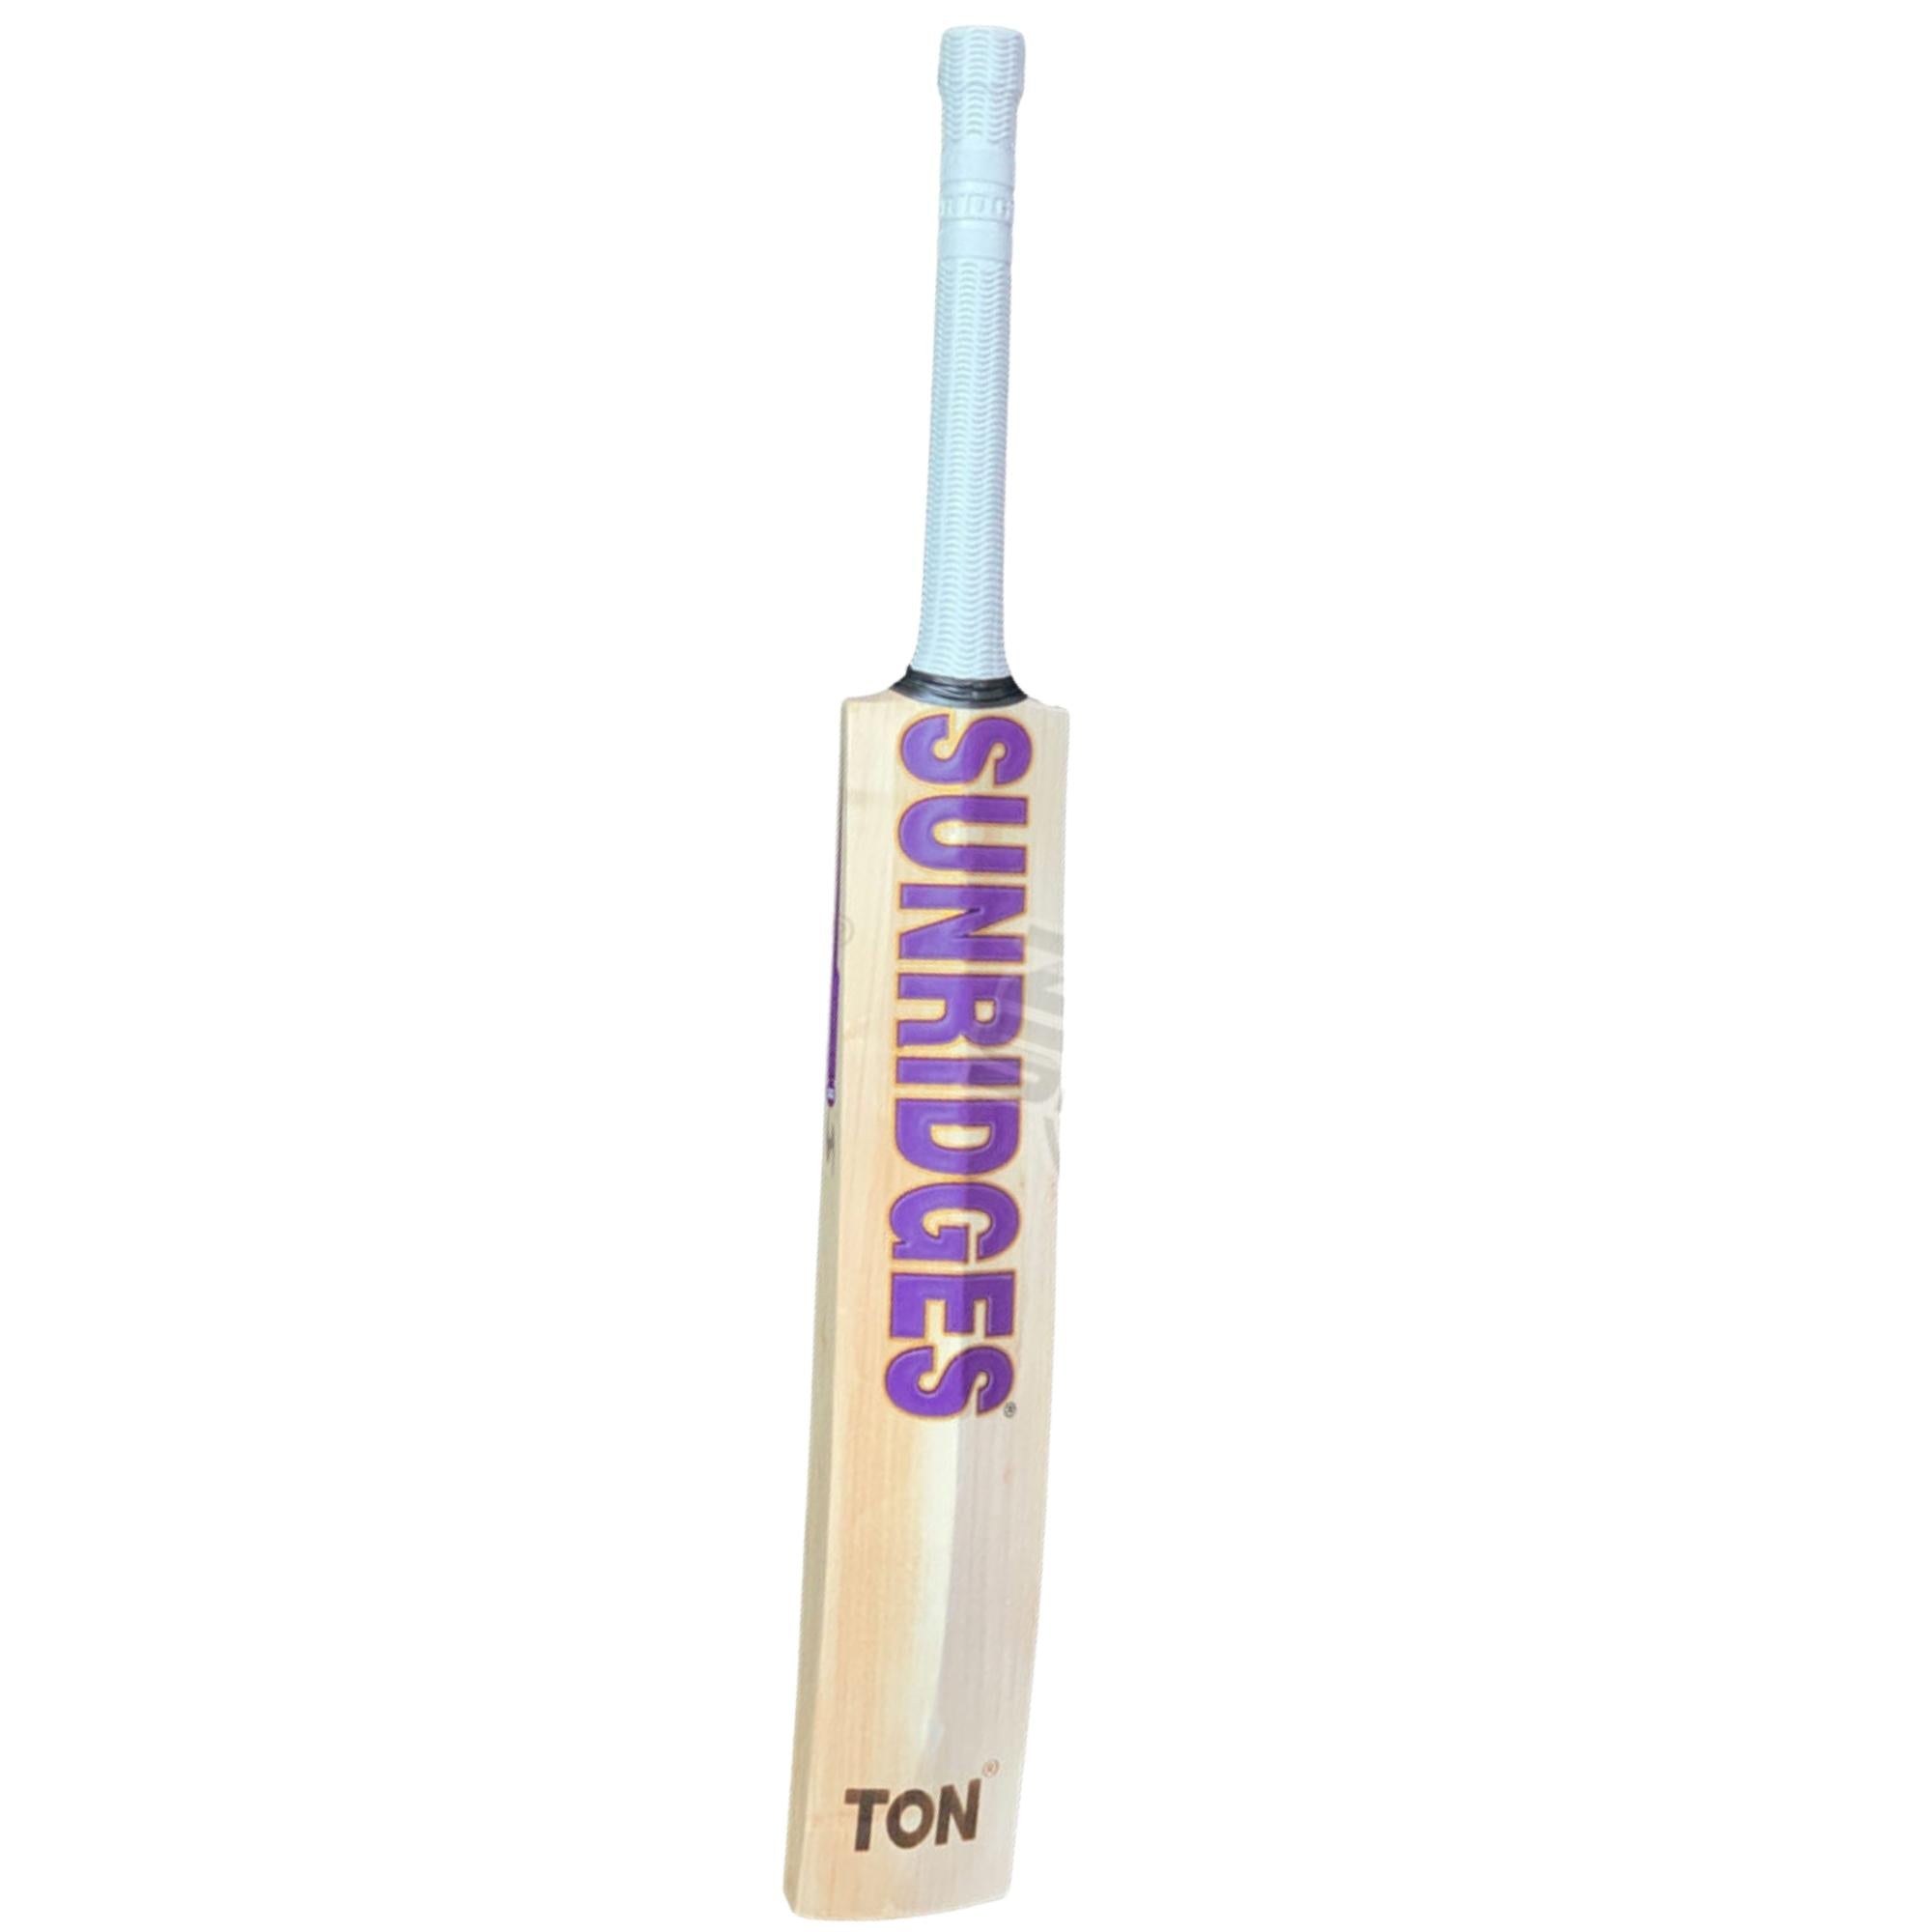 SS Ton Sunridges Glory Retro Classic Cricket Bat